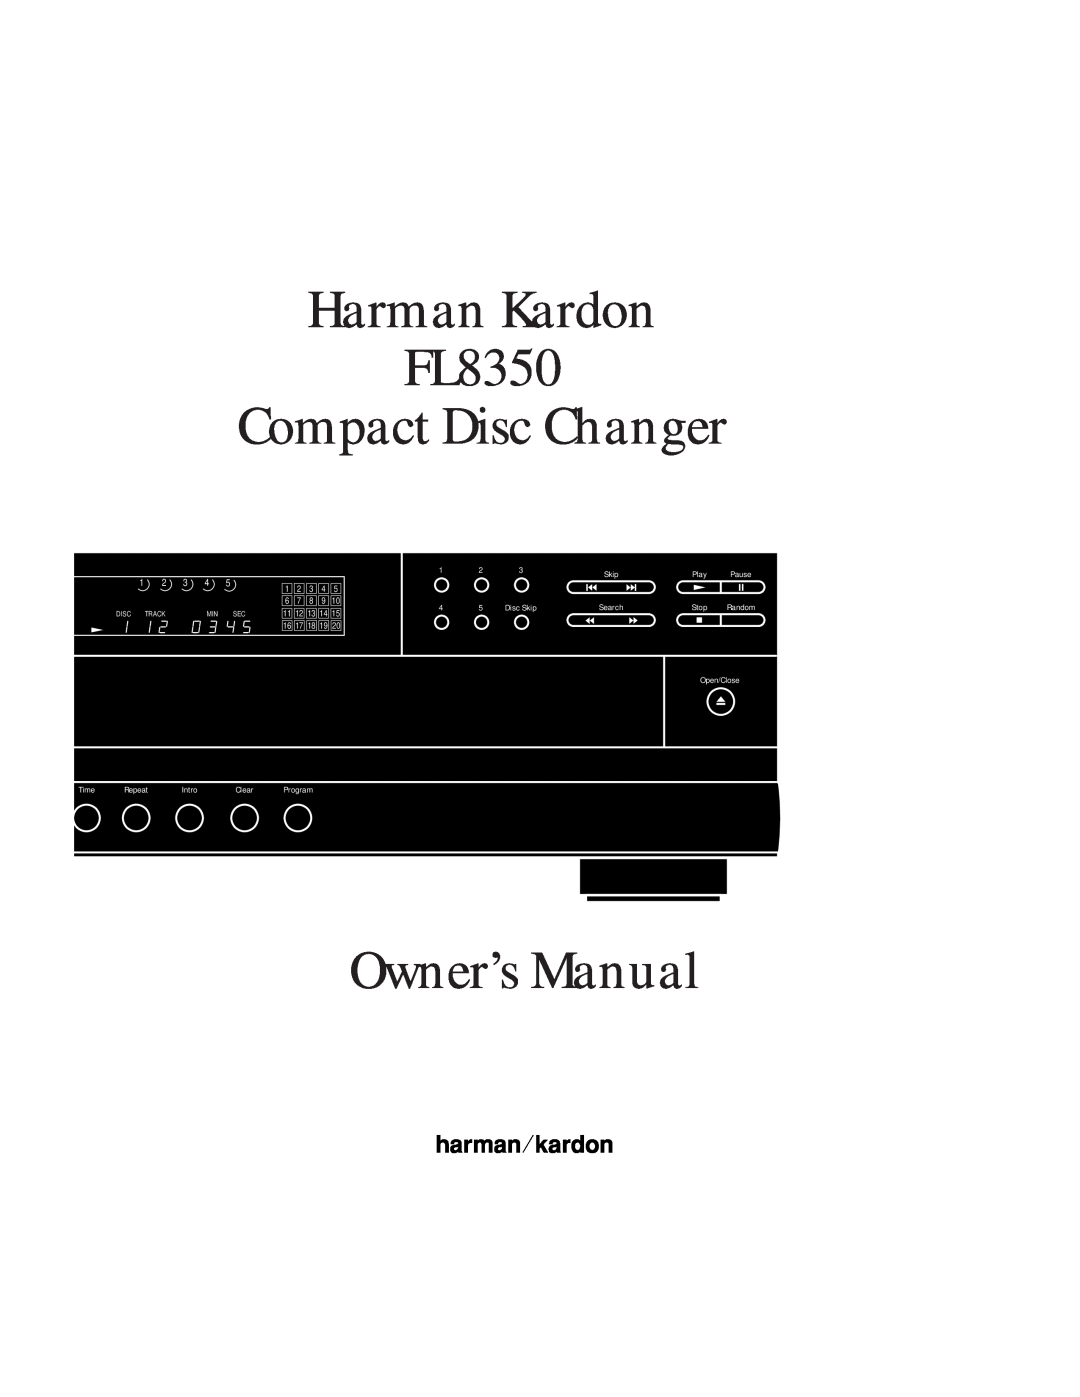 Harman-Kardon owner manual Harman Kardon FL8350 Compact Disc Changer 